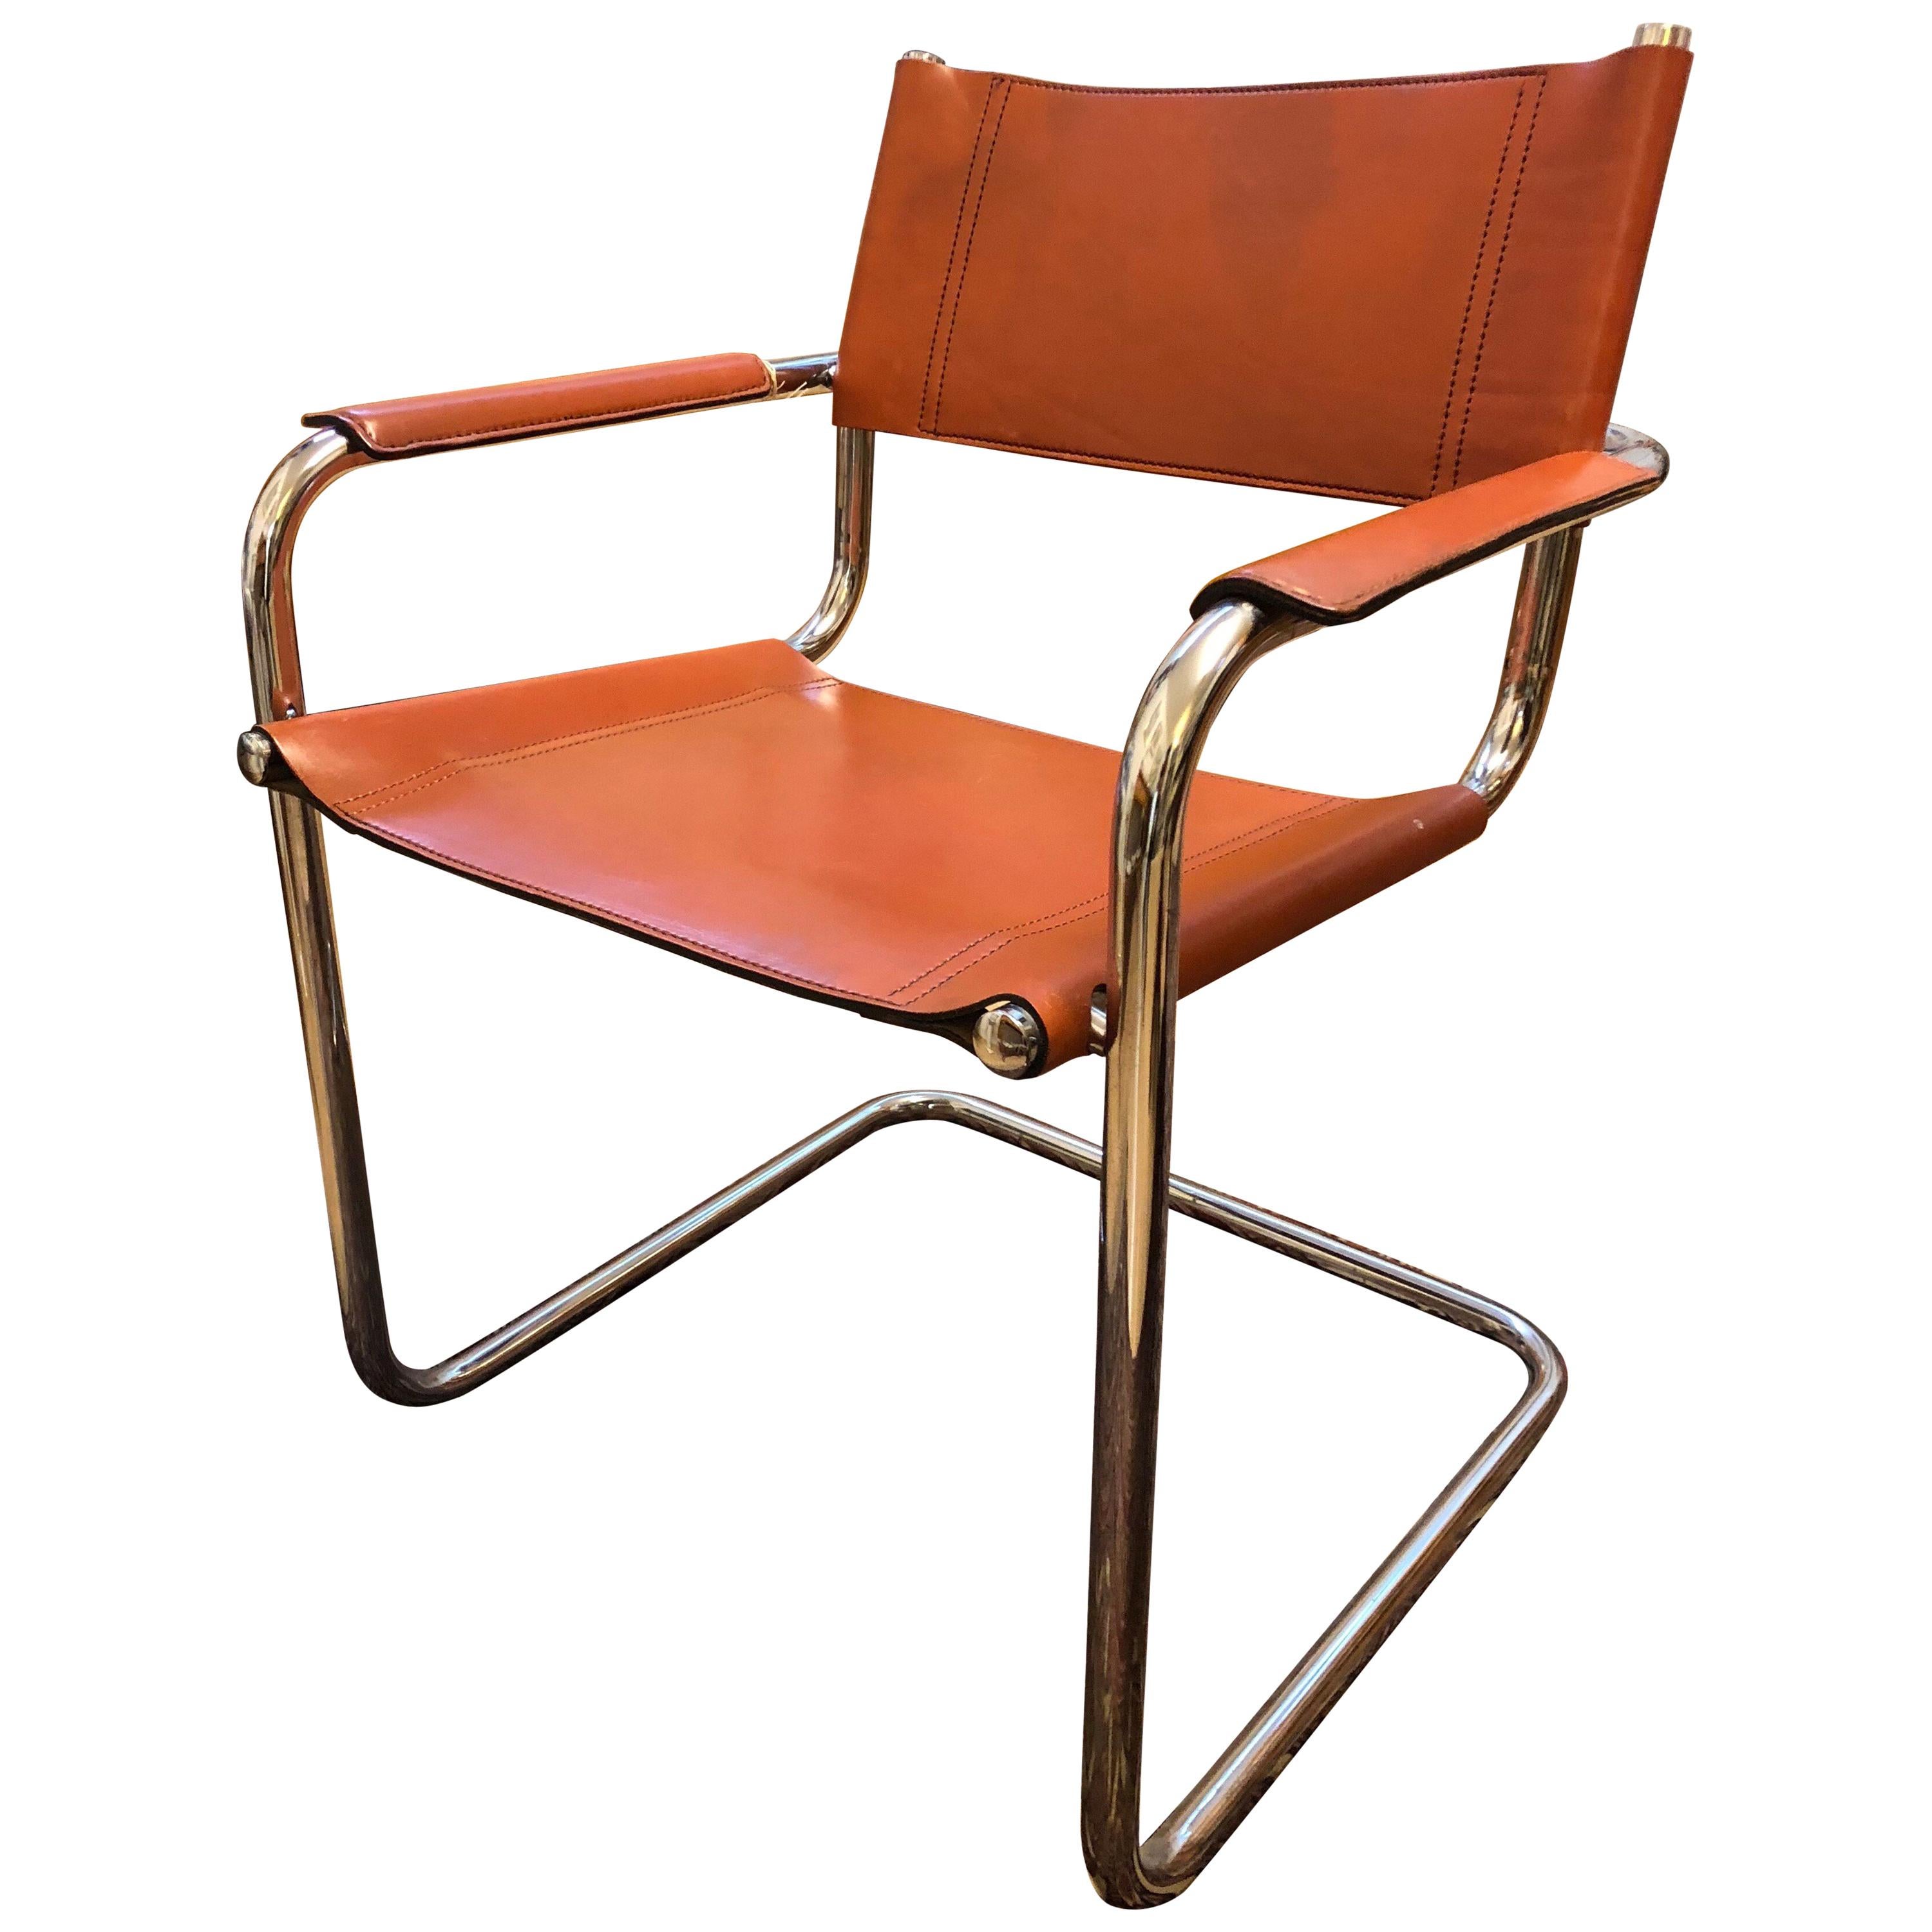 Vintage Tubular Bauhaus Design Cognac Original Leather Seat Chair, circa 1940